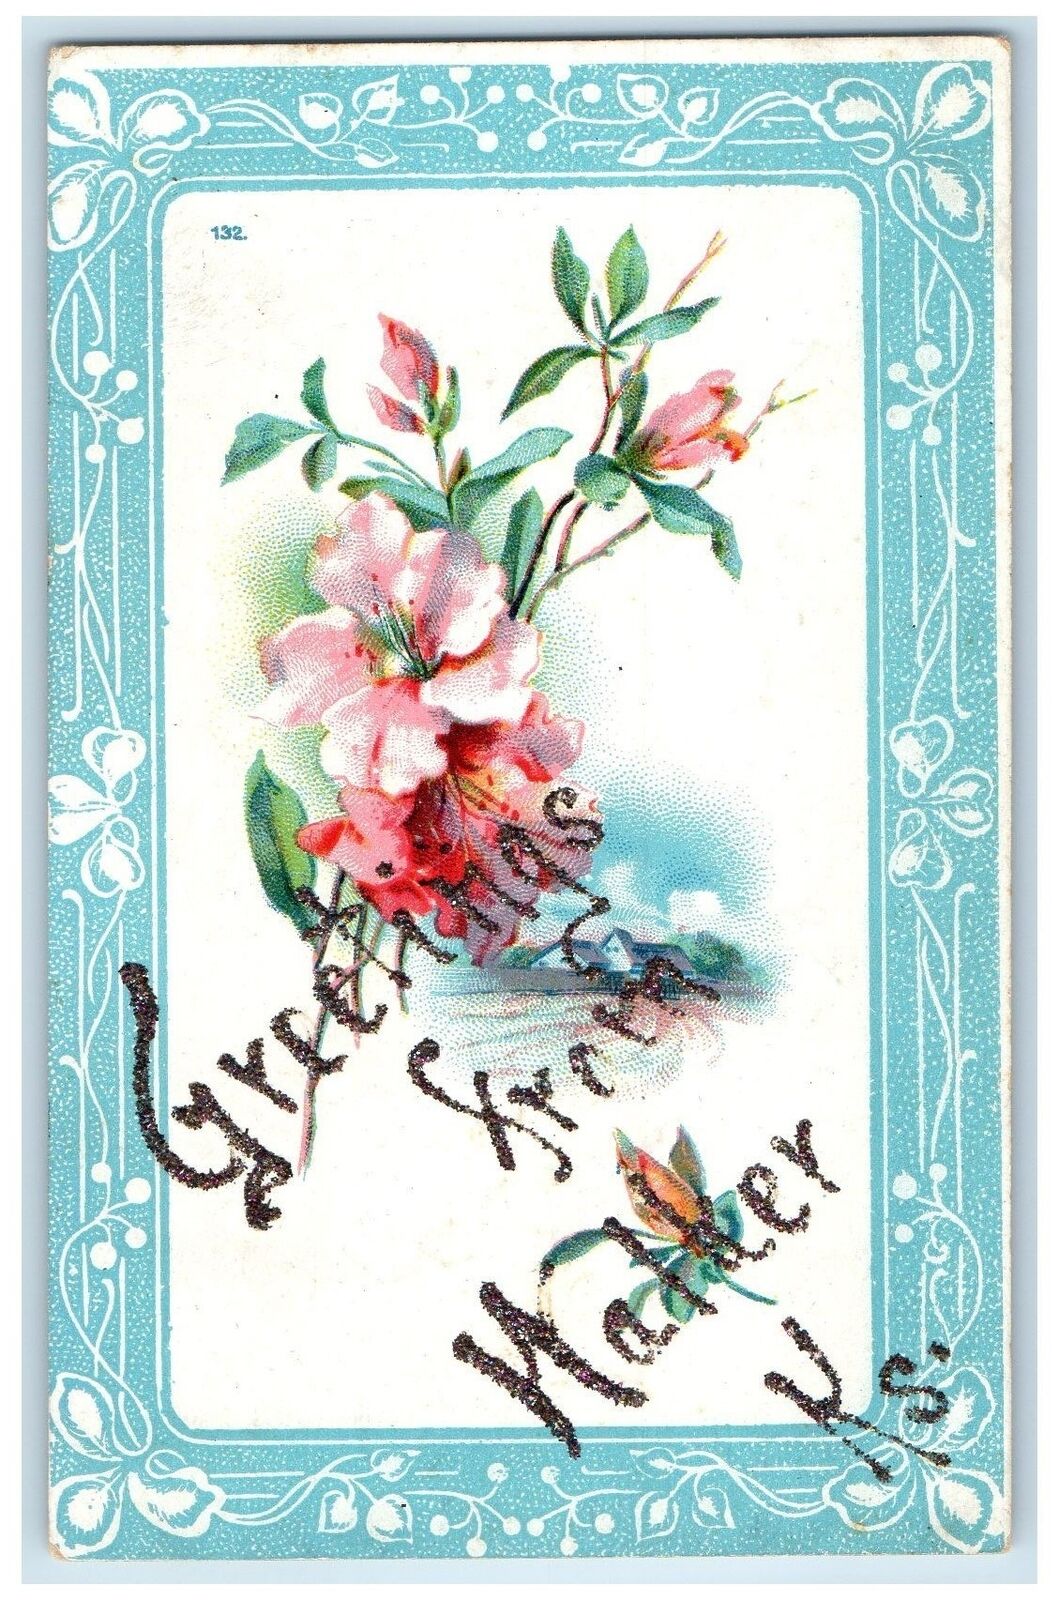 1909 Greetings From Walker Kansas KS Posted Flowers With Design Border Postcard